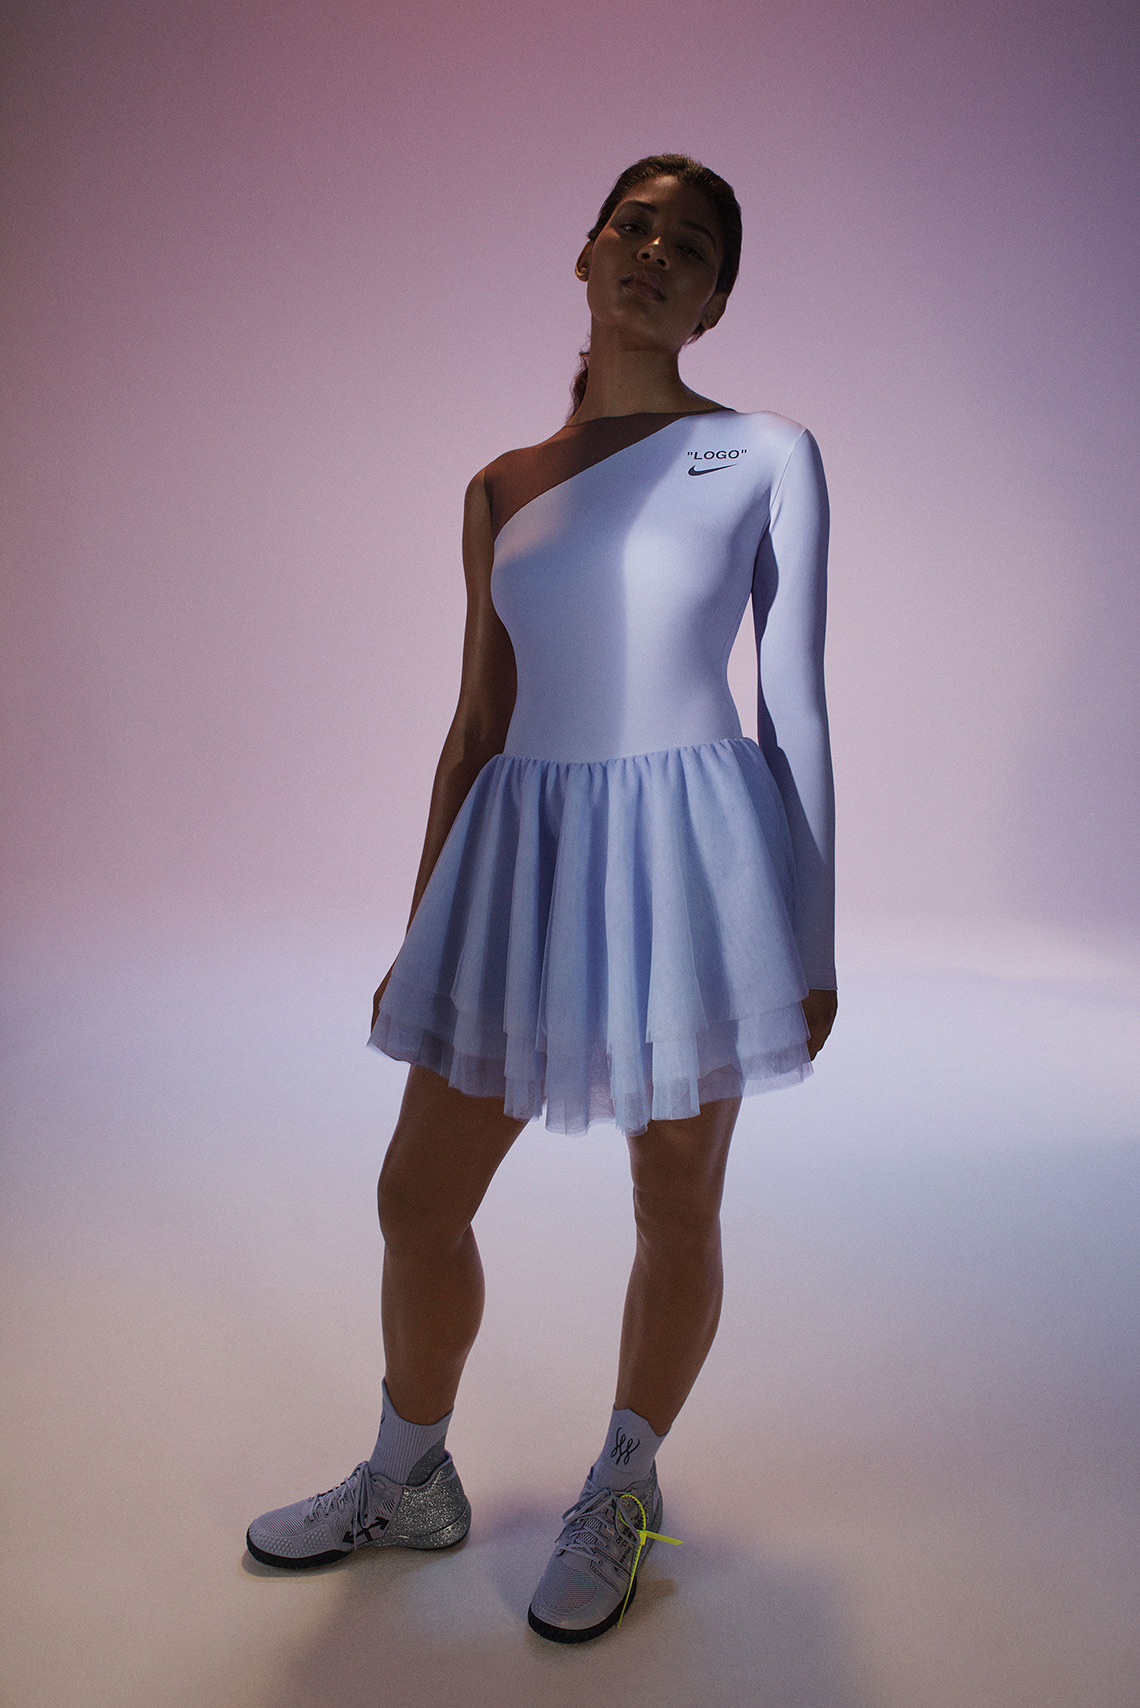 Serena Williams Virgil Abloh Nike Nikecourt Dress Us Open 4